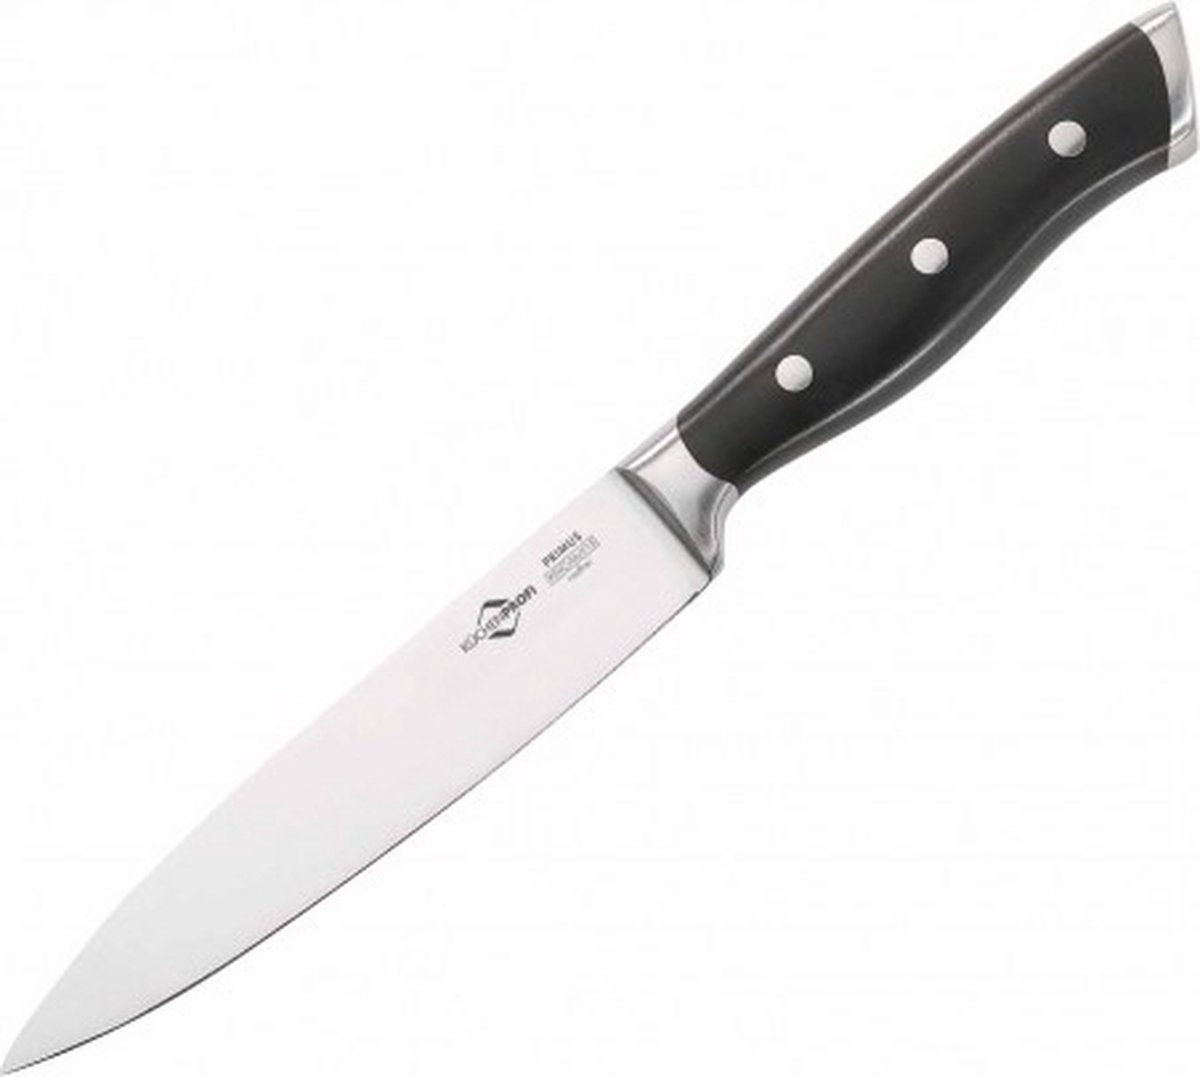 KUCHENPROFI Meat knife 16cm